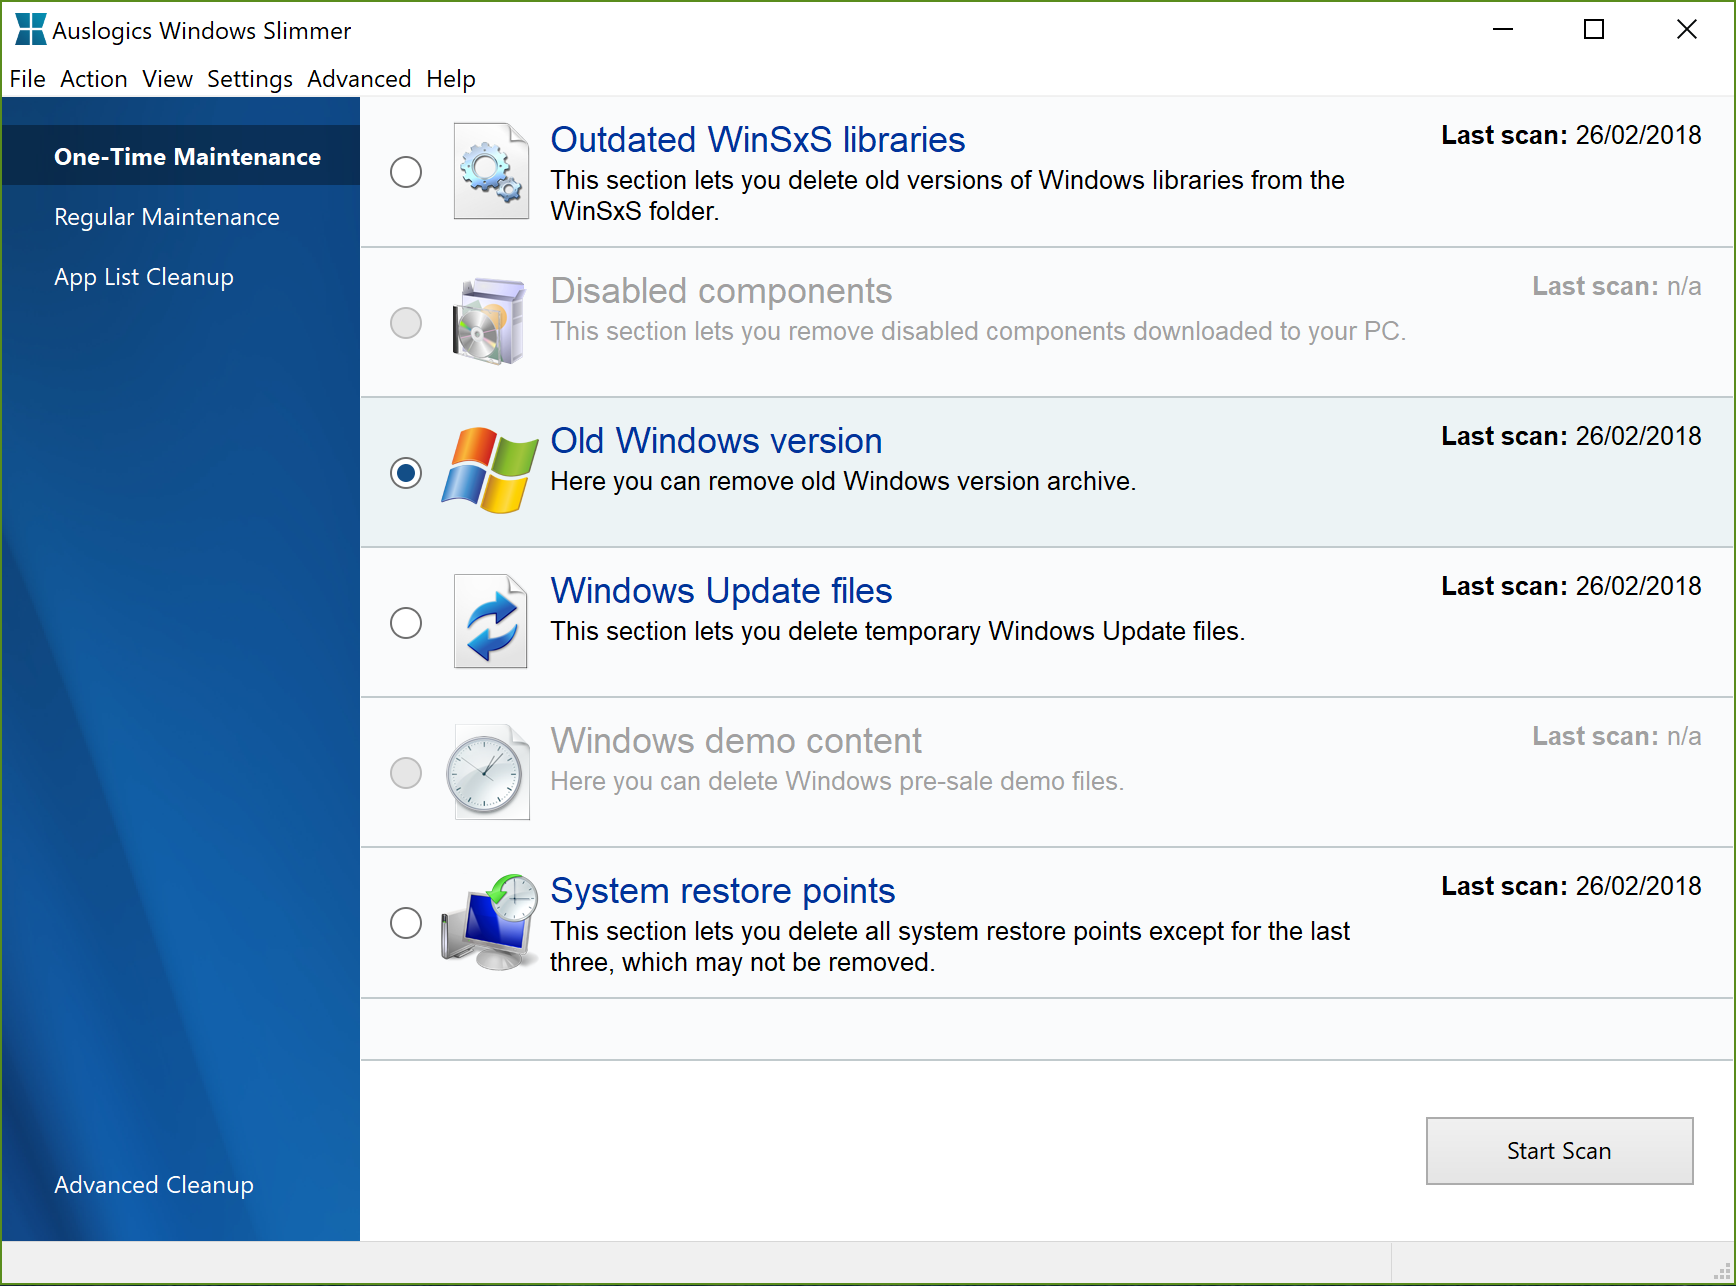 Auslogics Windows Slimmer Pro 4.0.0.4 downloading